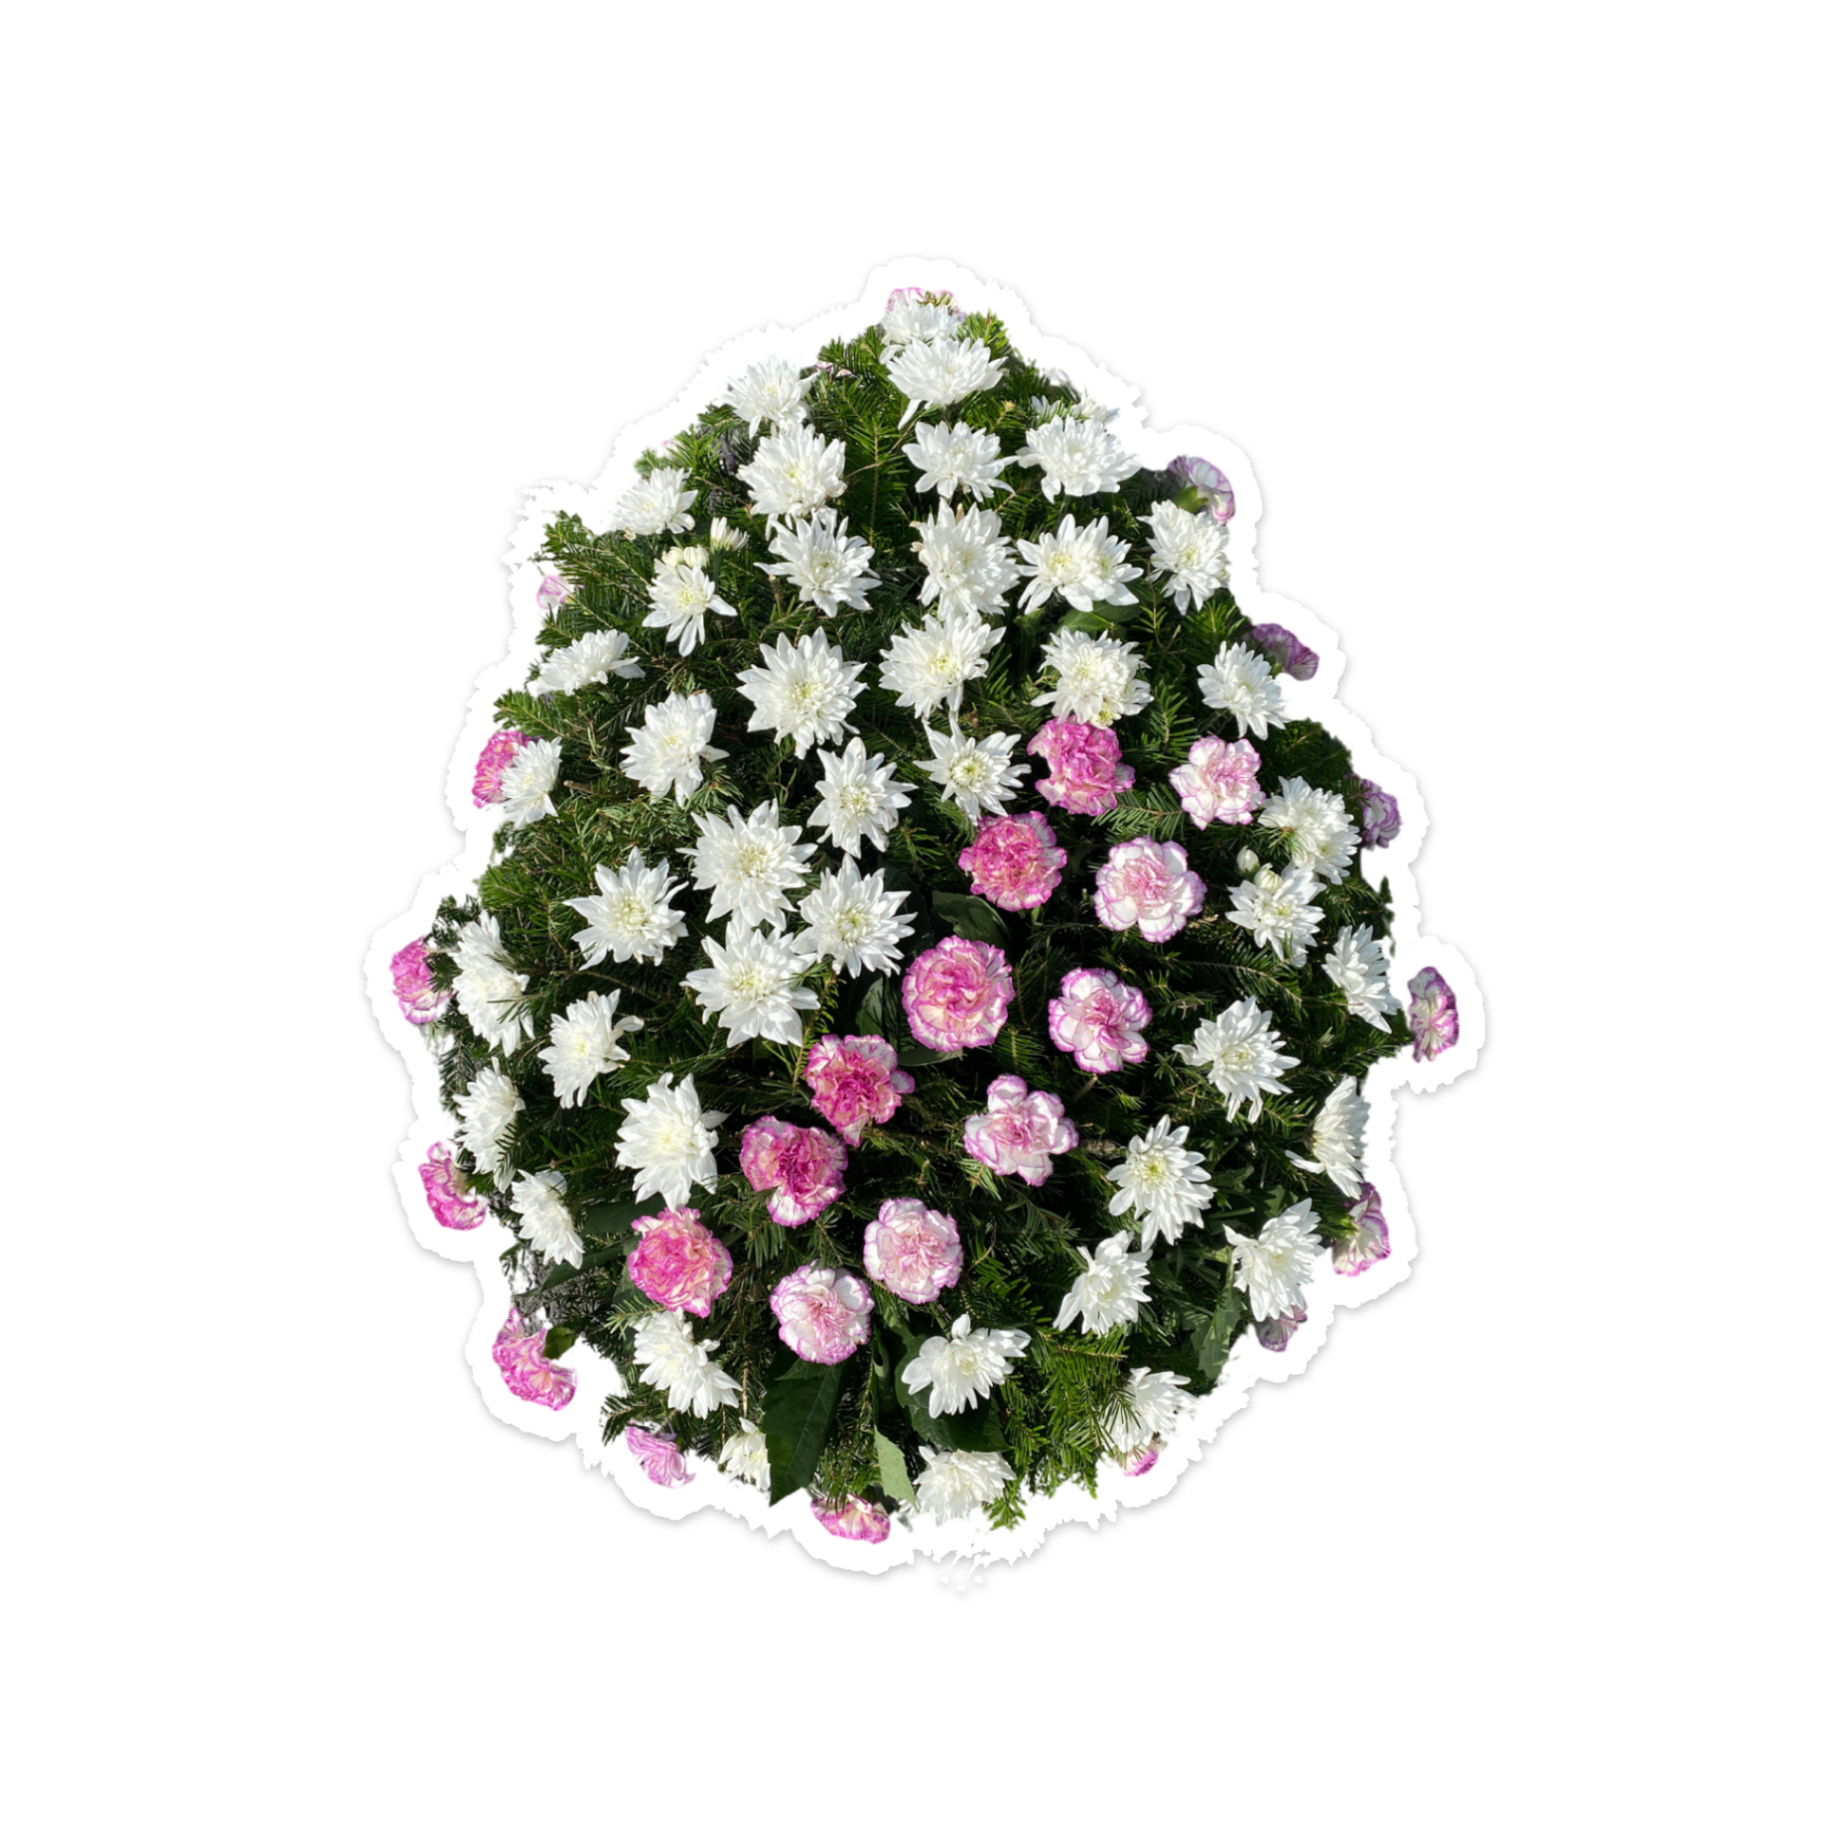 Coroana funerara naturala unica din garoafe roz asezate diagonal si crizanteme albe